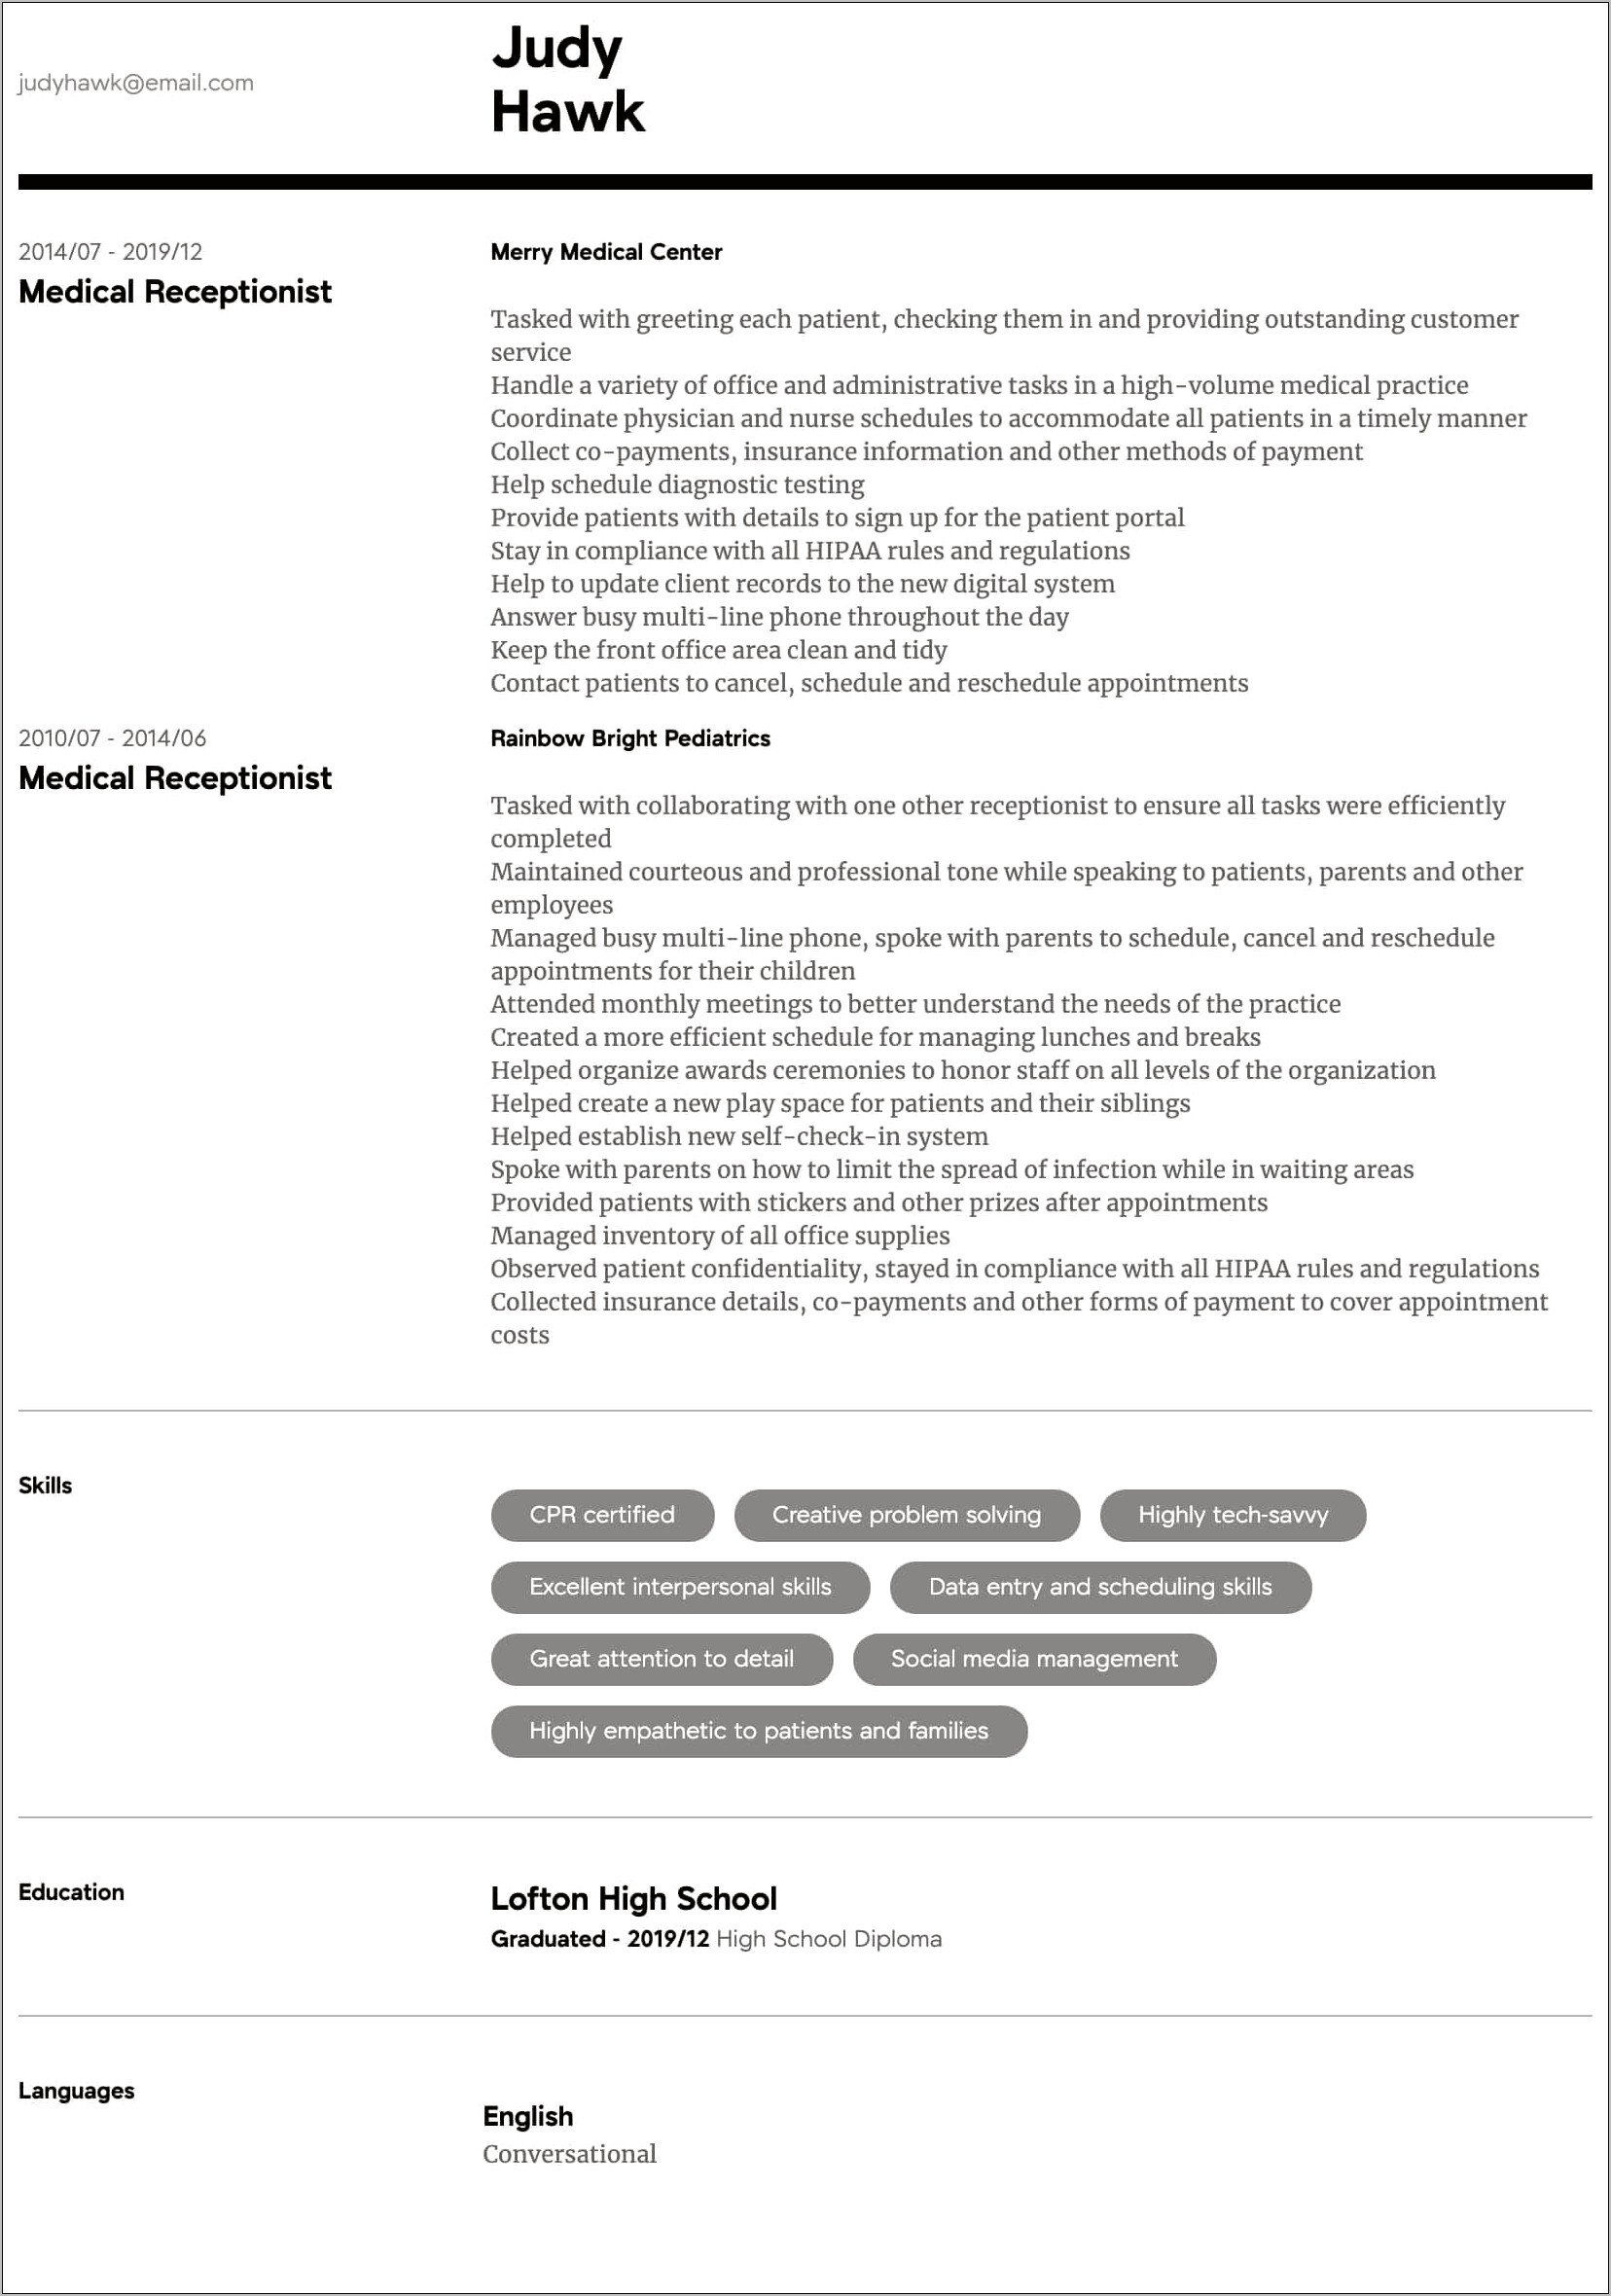 Sample Resume For Medical Receptionist Position